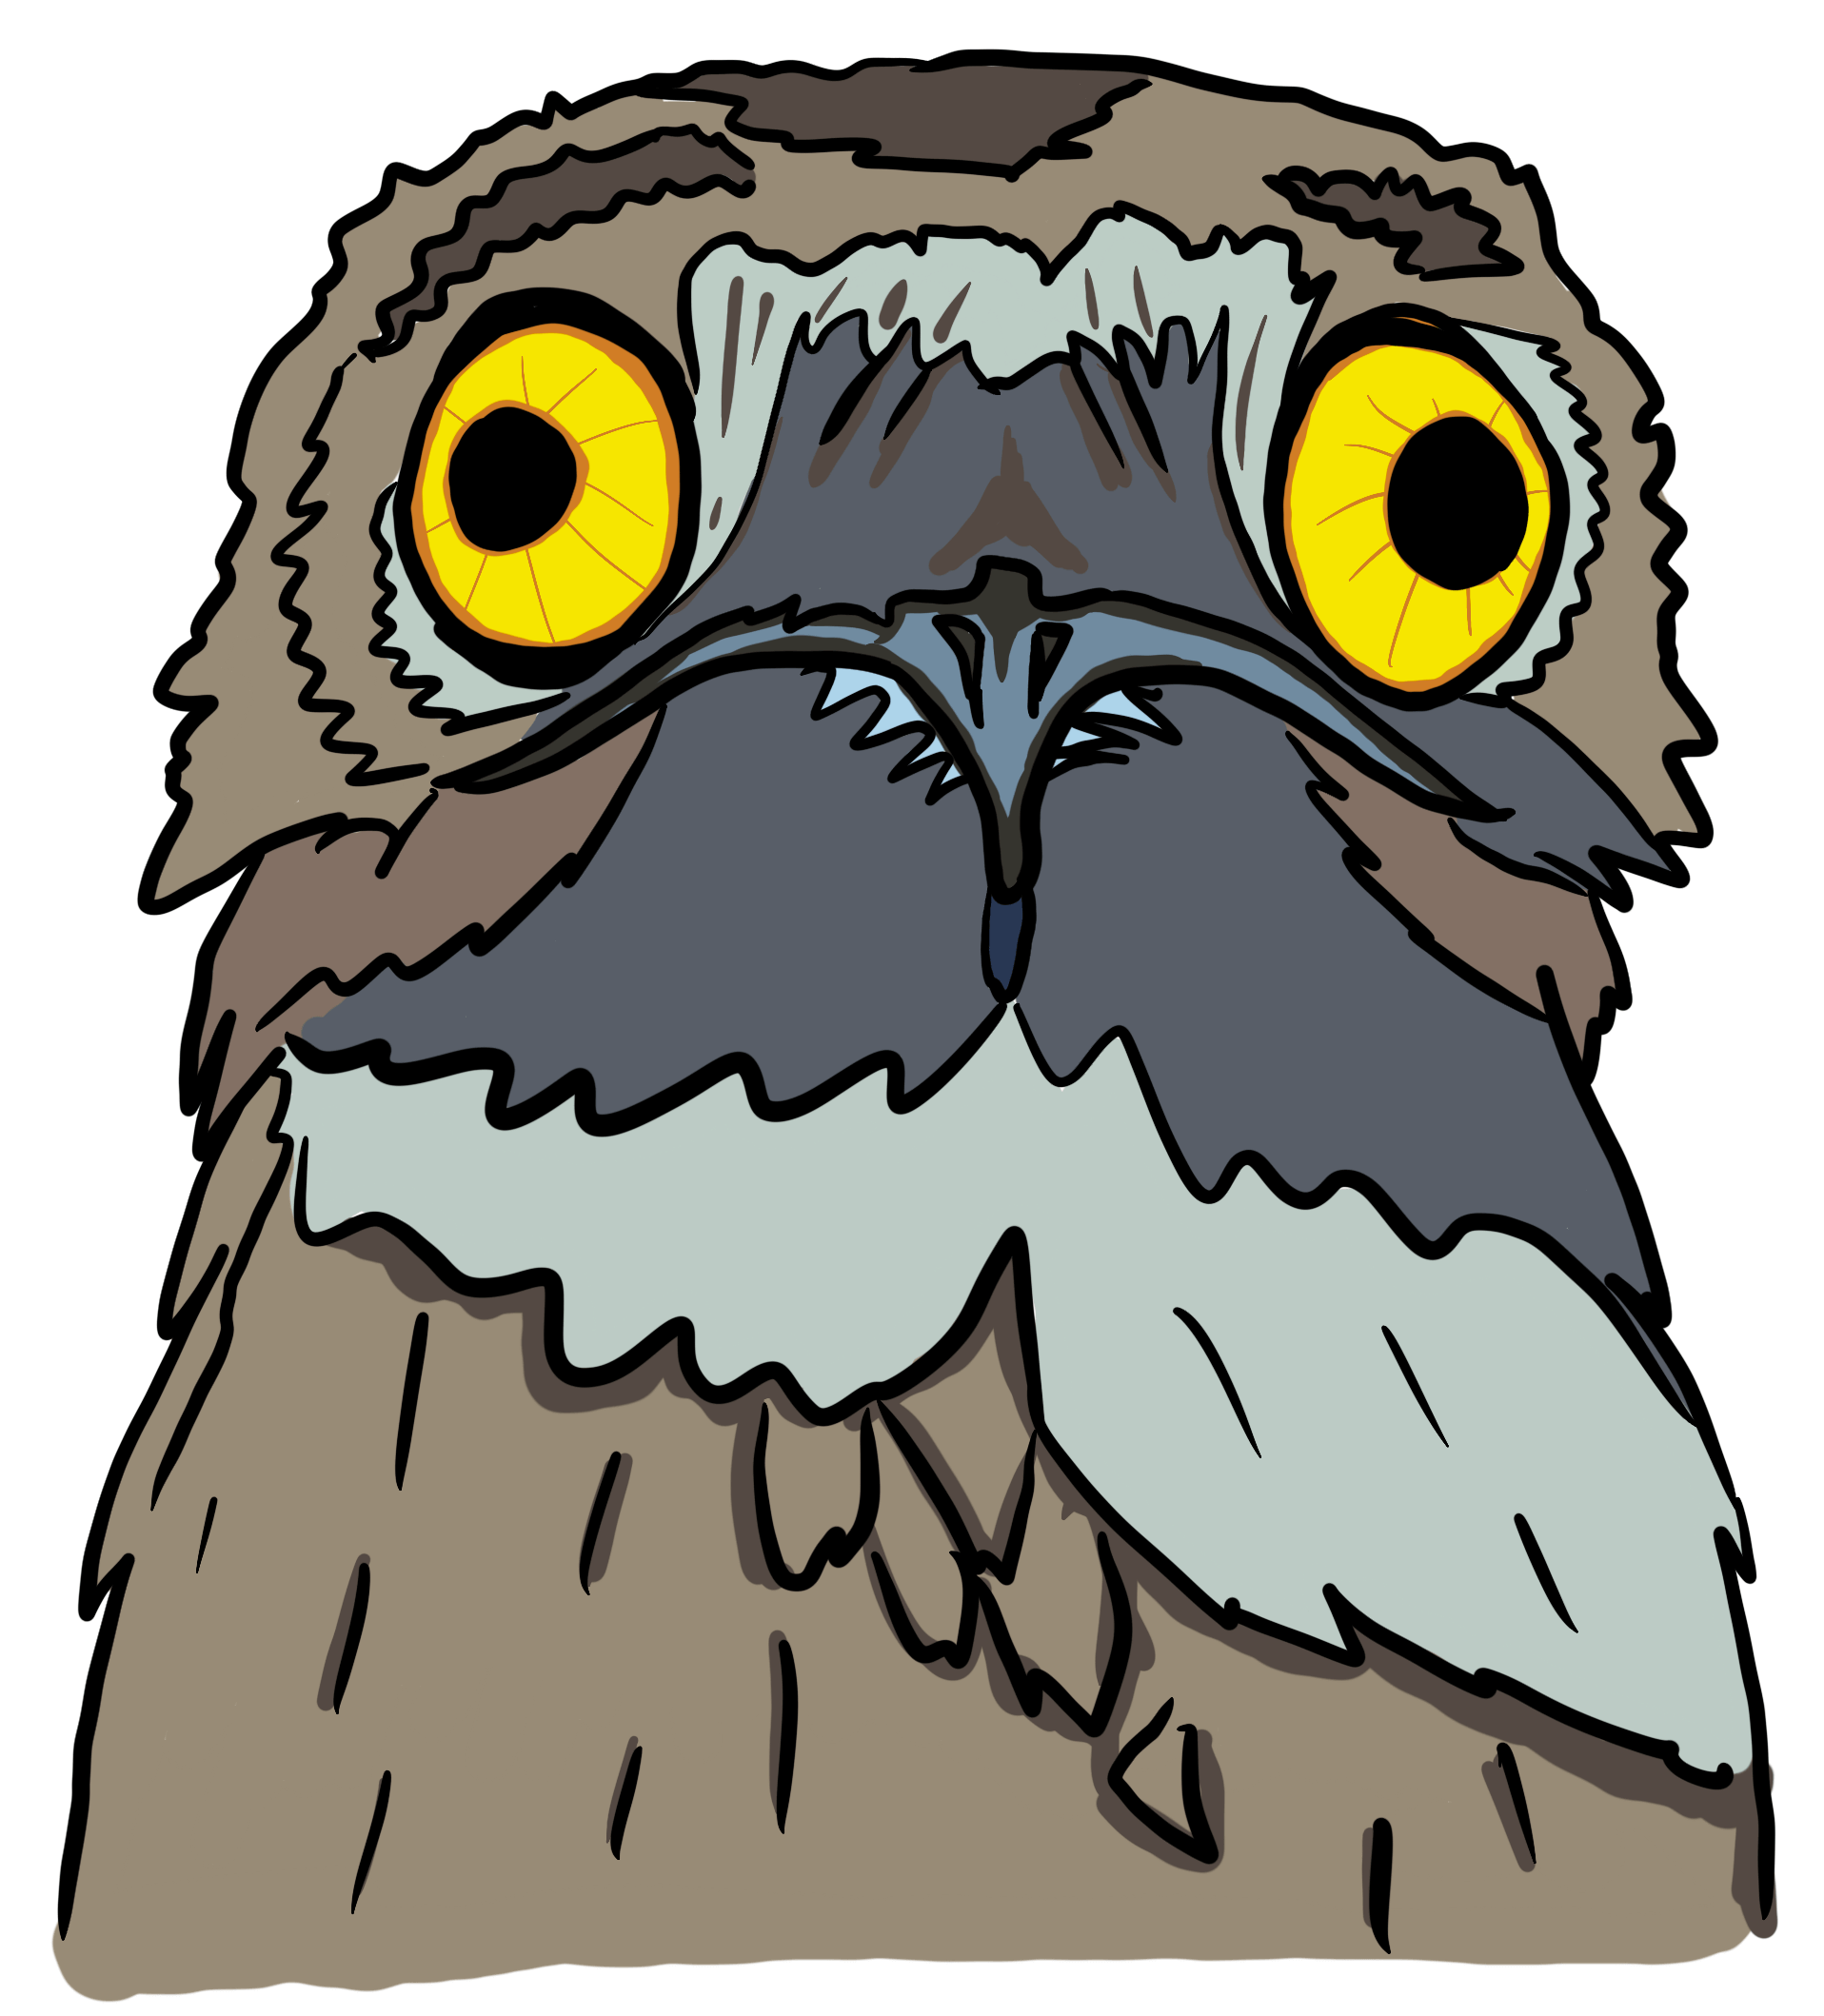 Ugly owl Potoo